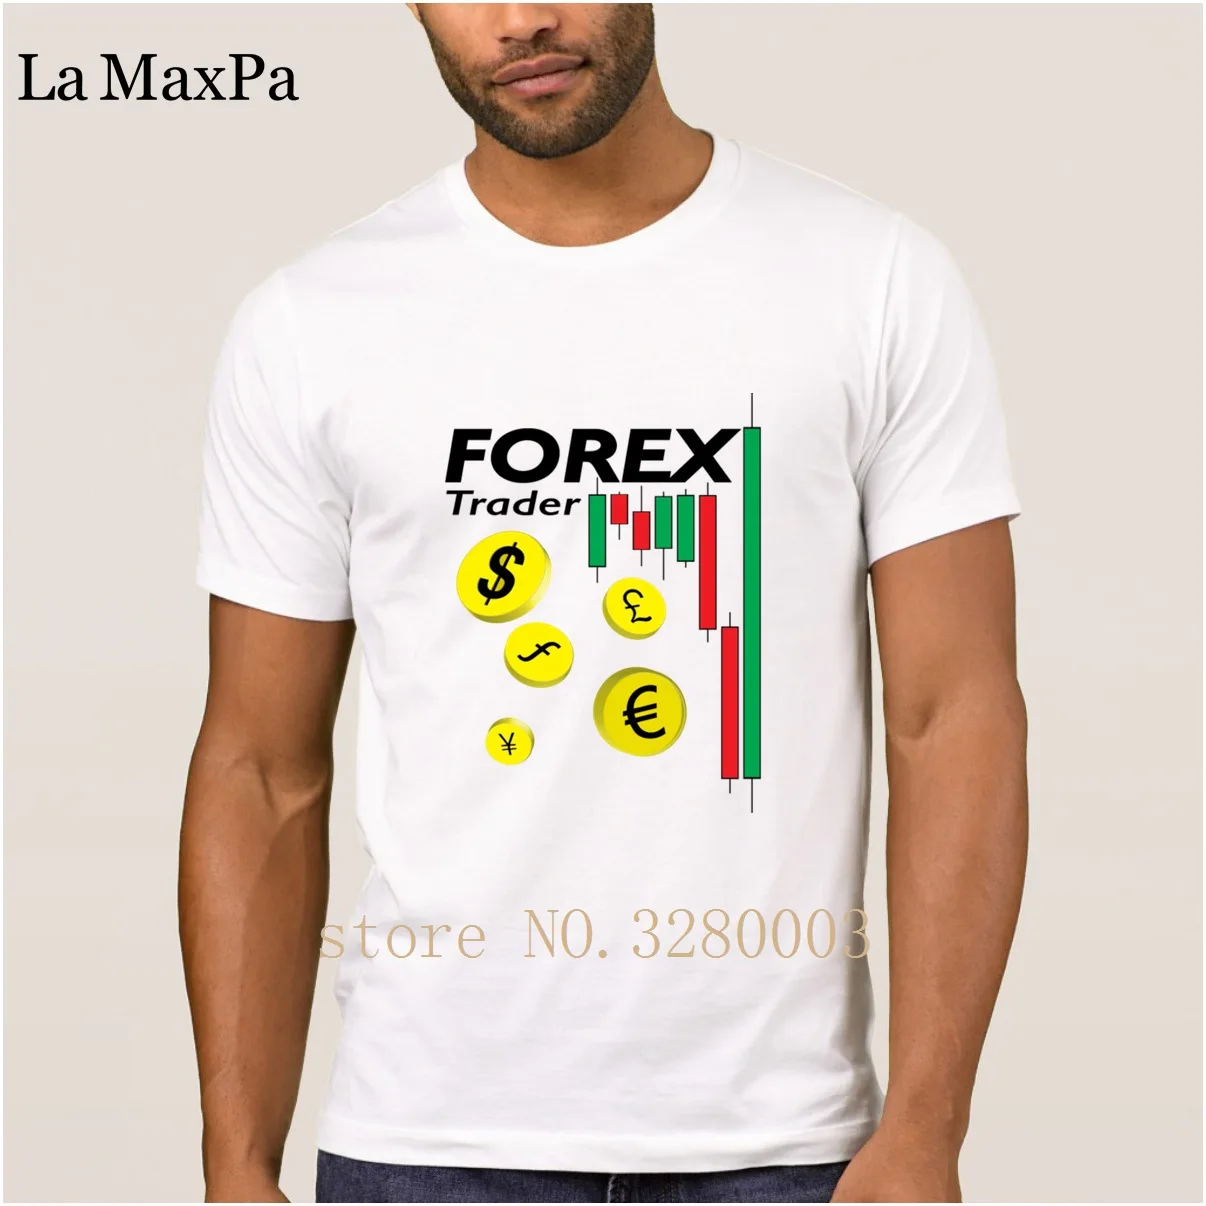 La Maxpa дизайнерская Лучшая мужская футболка forex trader мужская футболка Летняя оригинальная Мужская футболка плюс размер 3xl дешевая распродажа